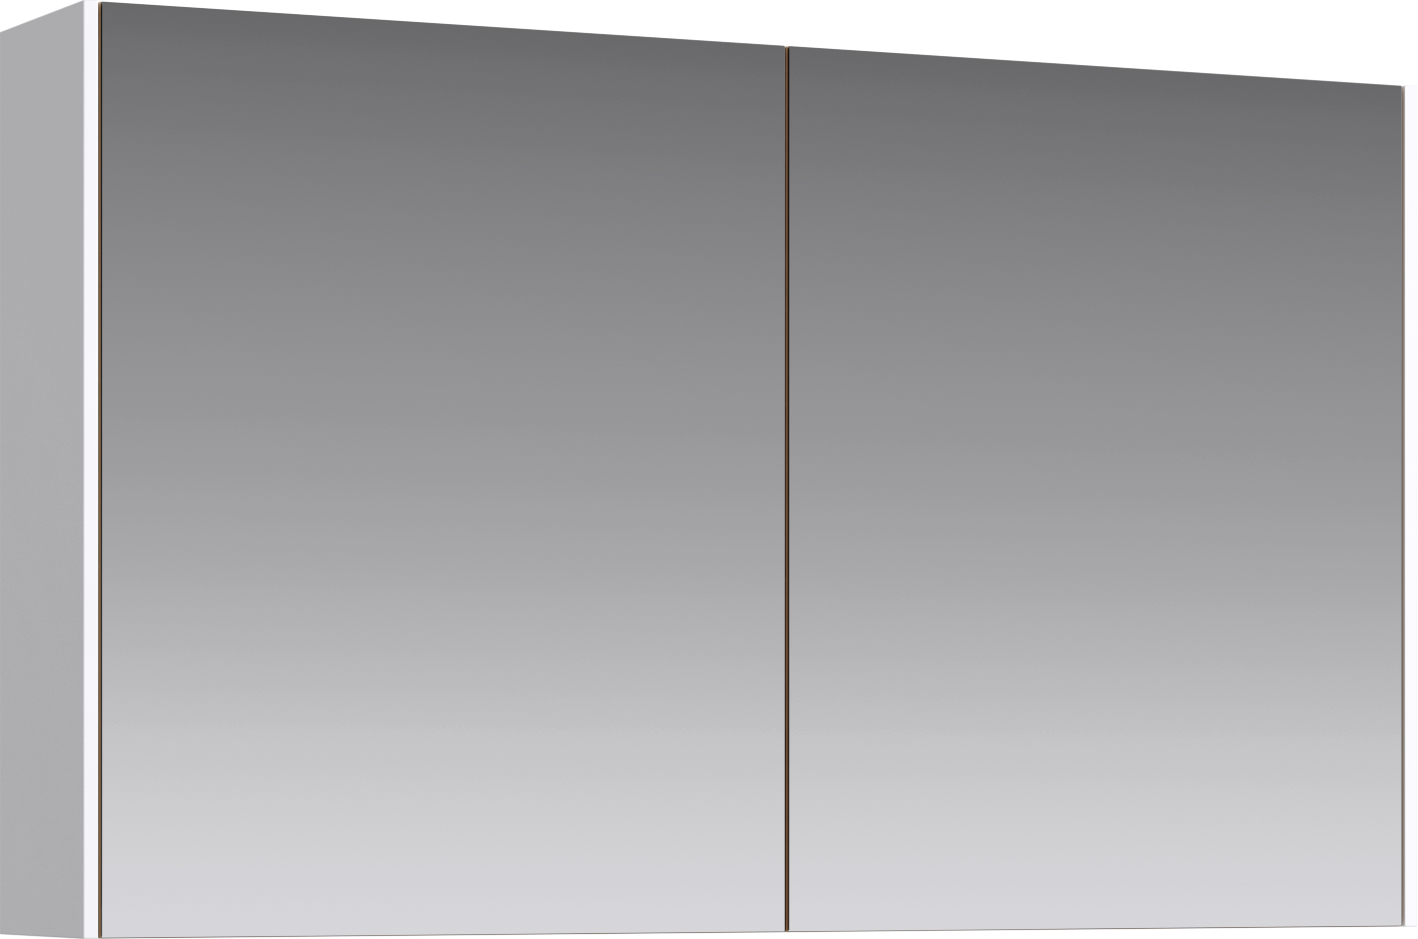 Сменный элемент Aqwella 5 stars Mobi для зеркала-шкафа, белый, 2 шт. MOB0717W - 1